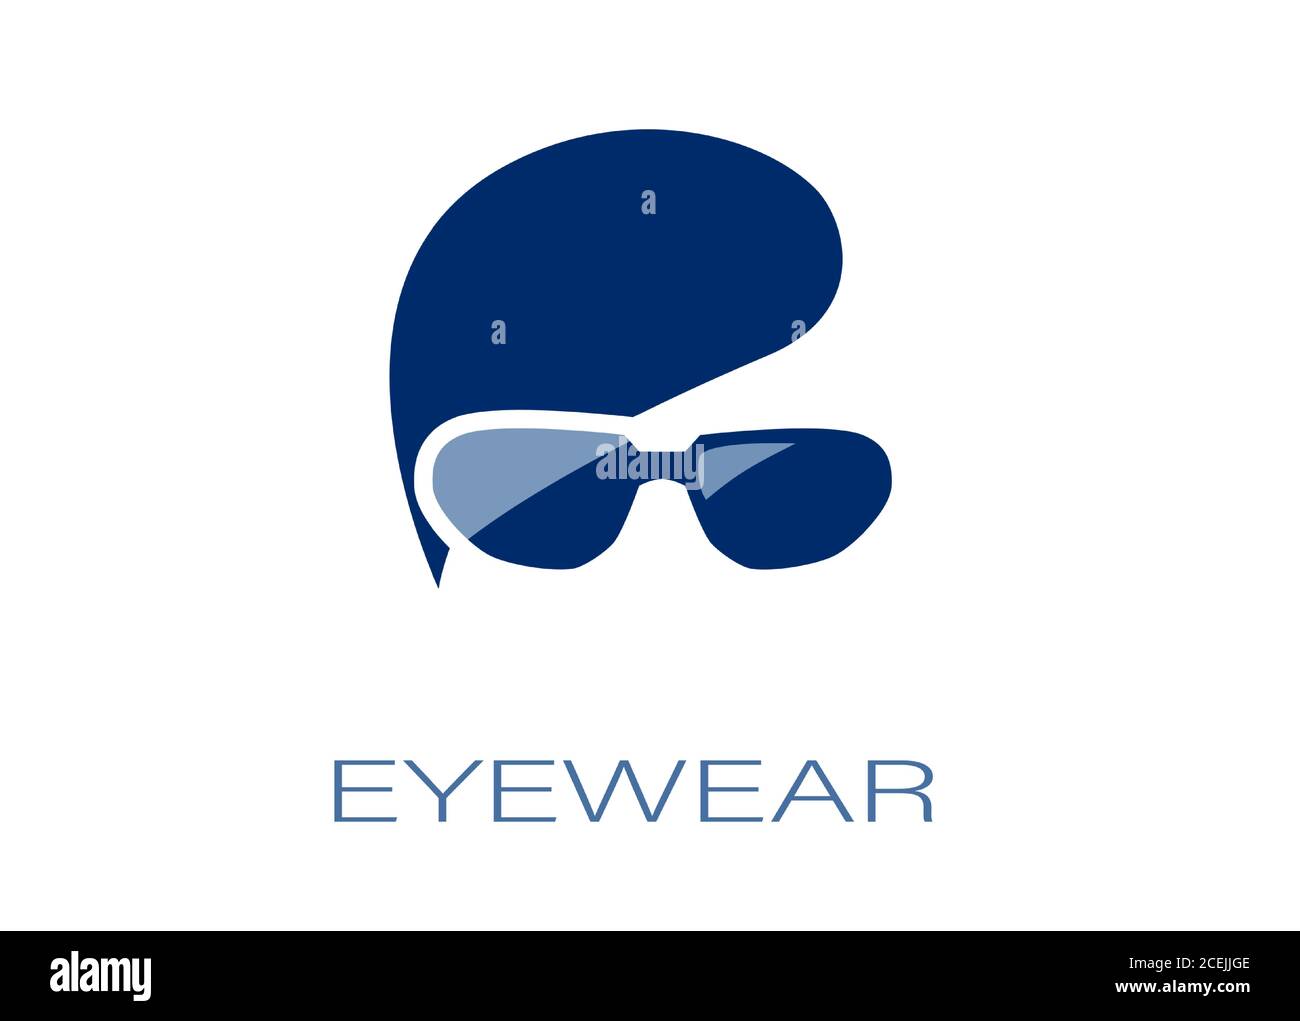 Tiffany-Co-logo - Clear Vision Eye Care